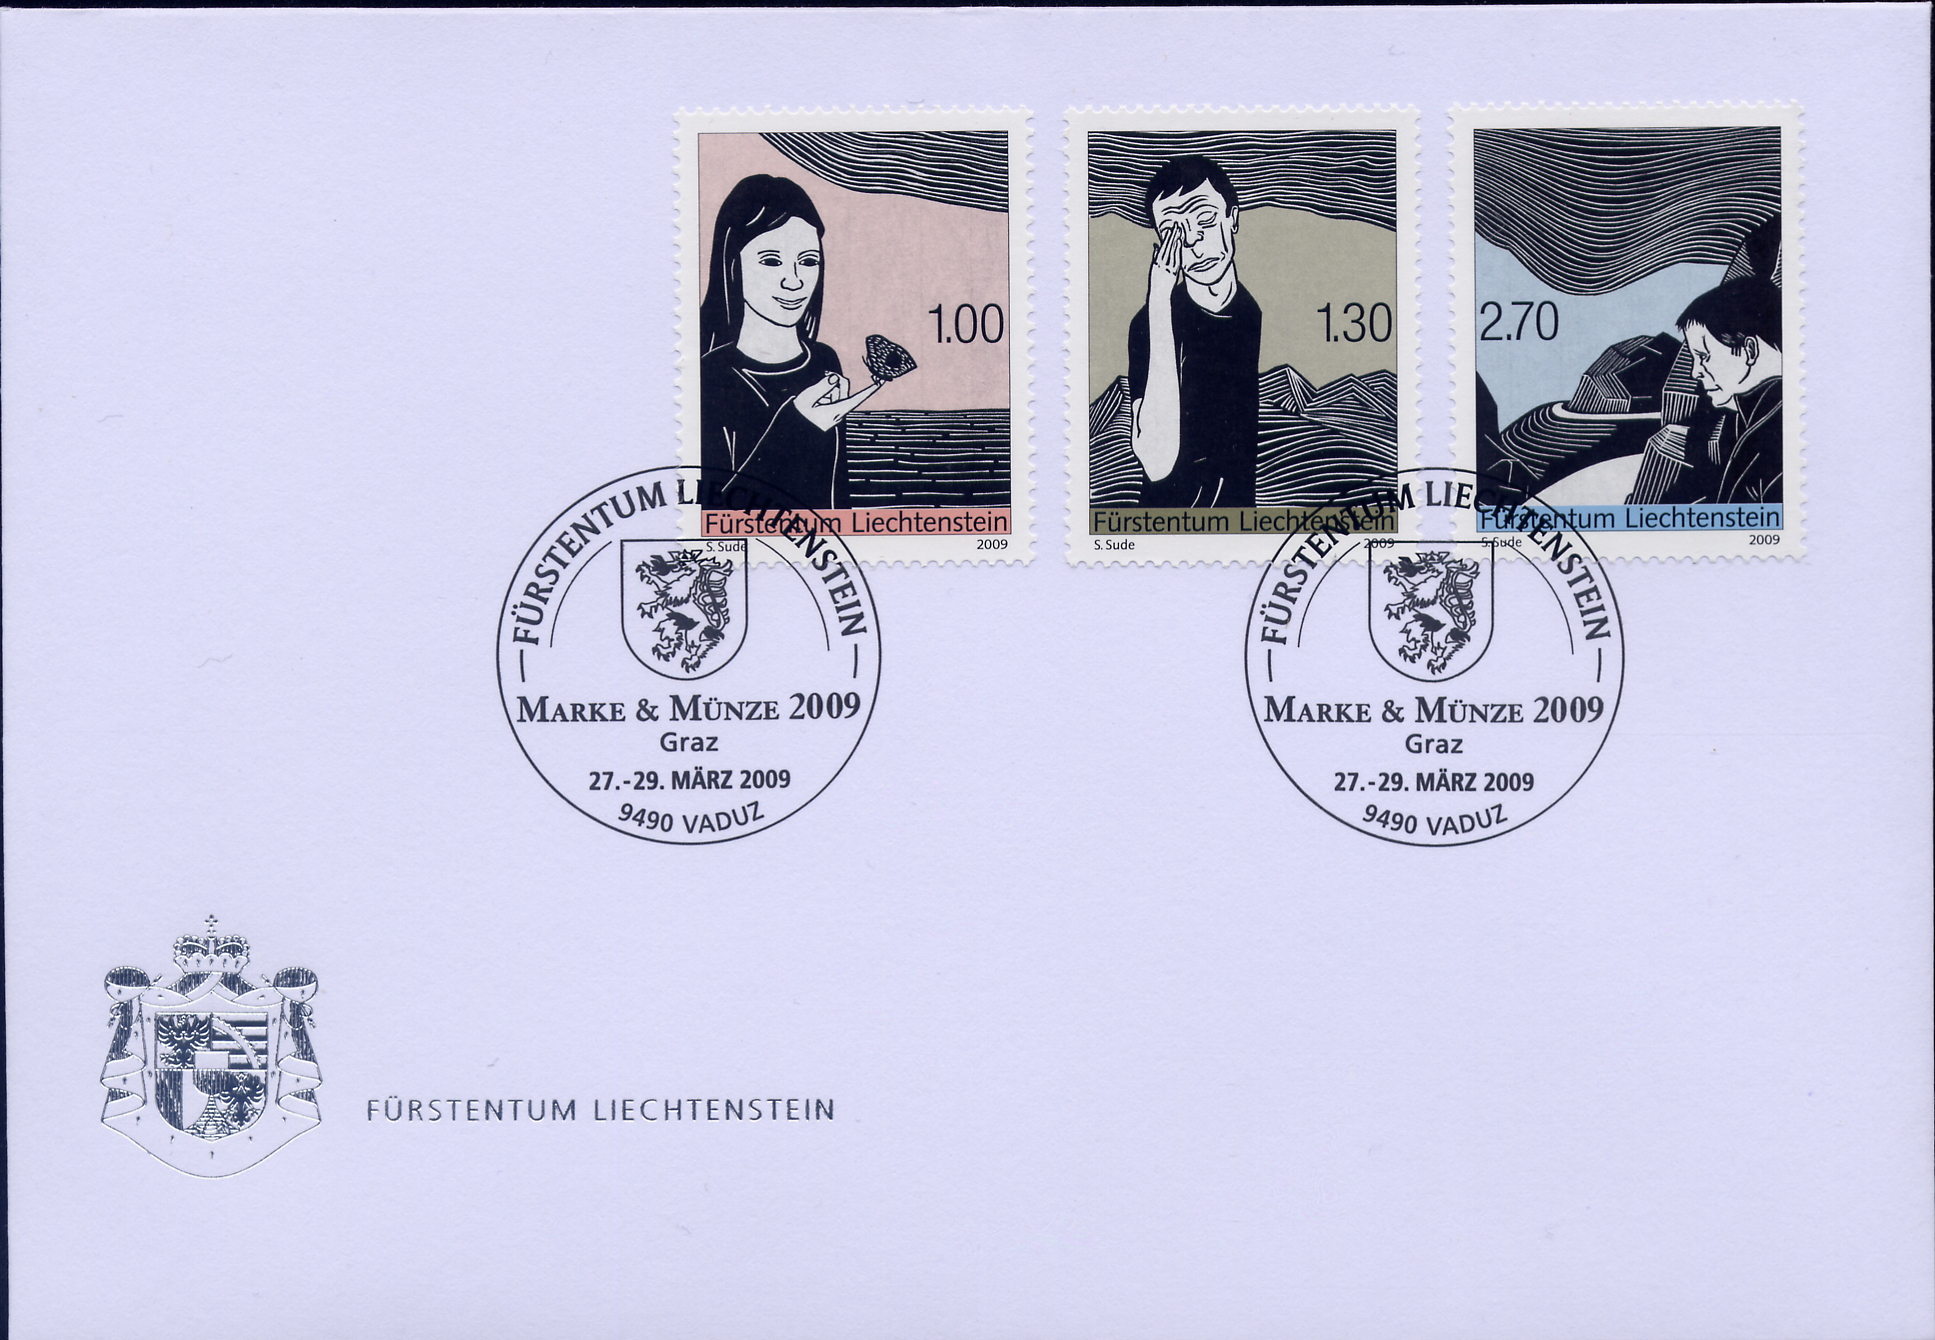 https://swiss-stamps.org/wp-content/uploads/2023/12/2009-3-Graz.jpg